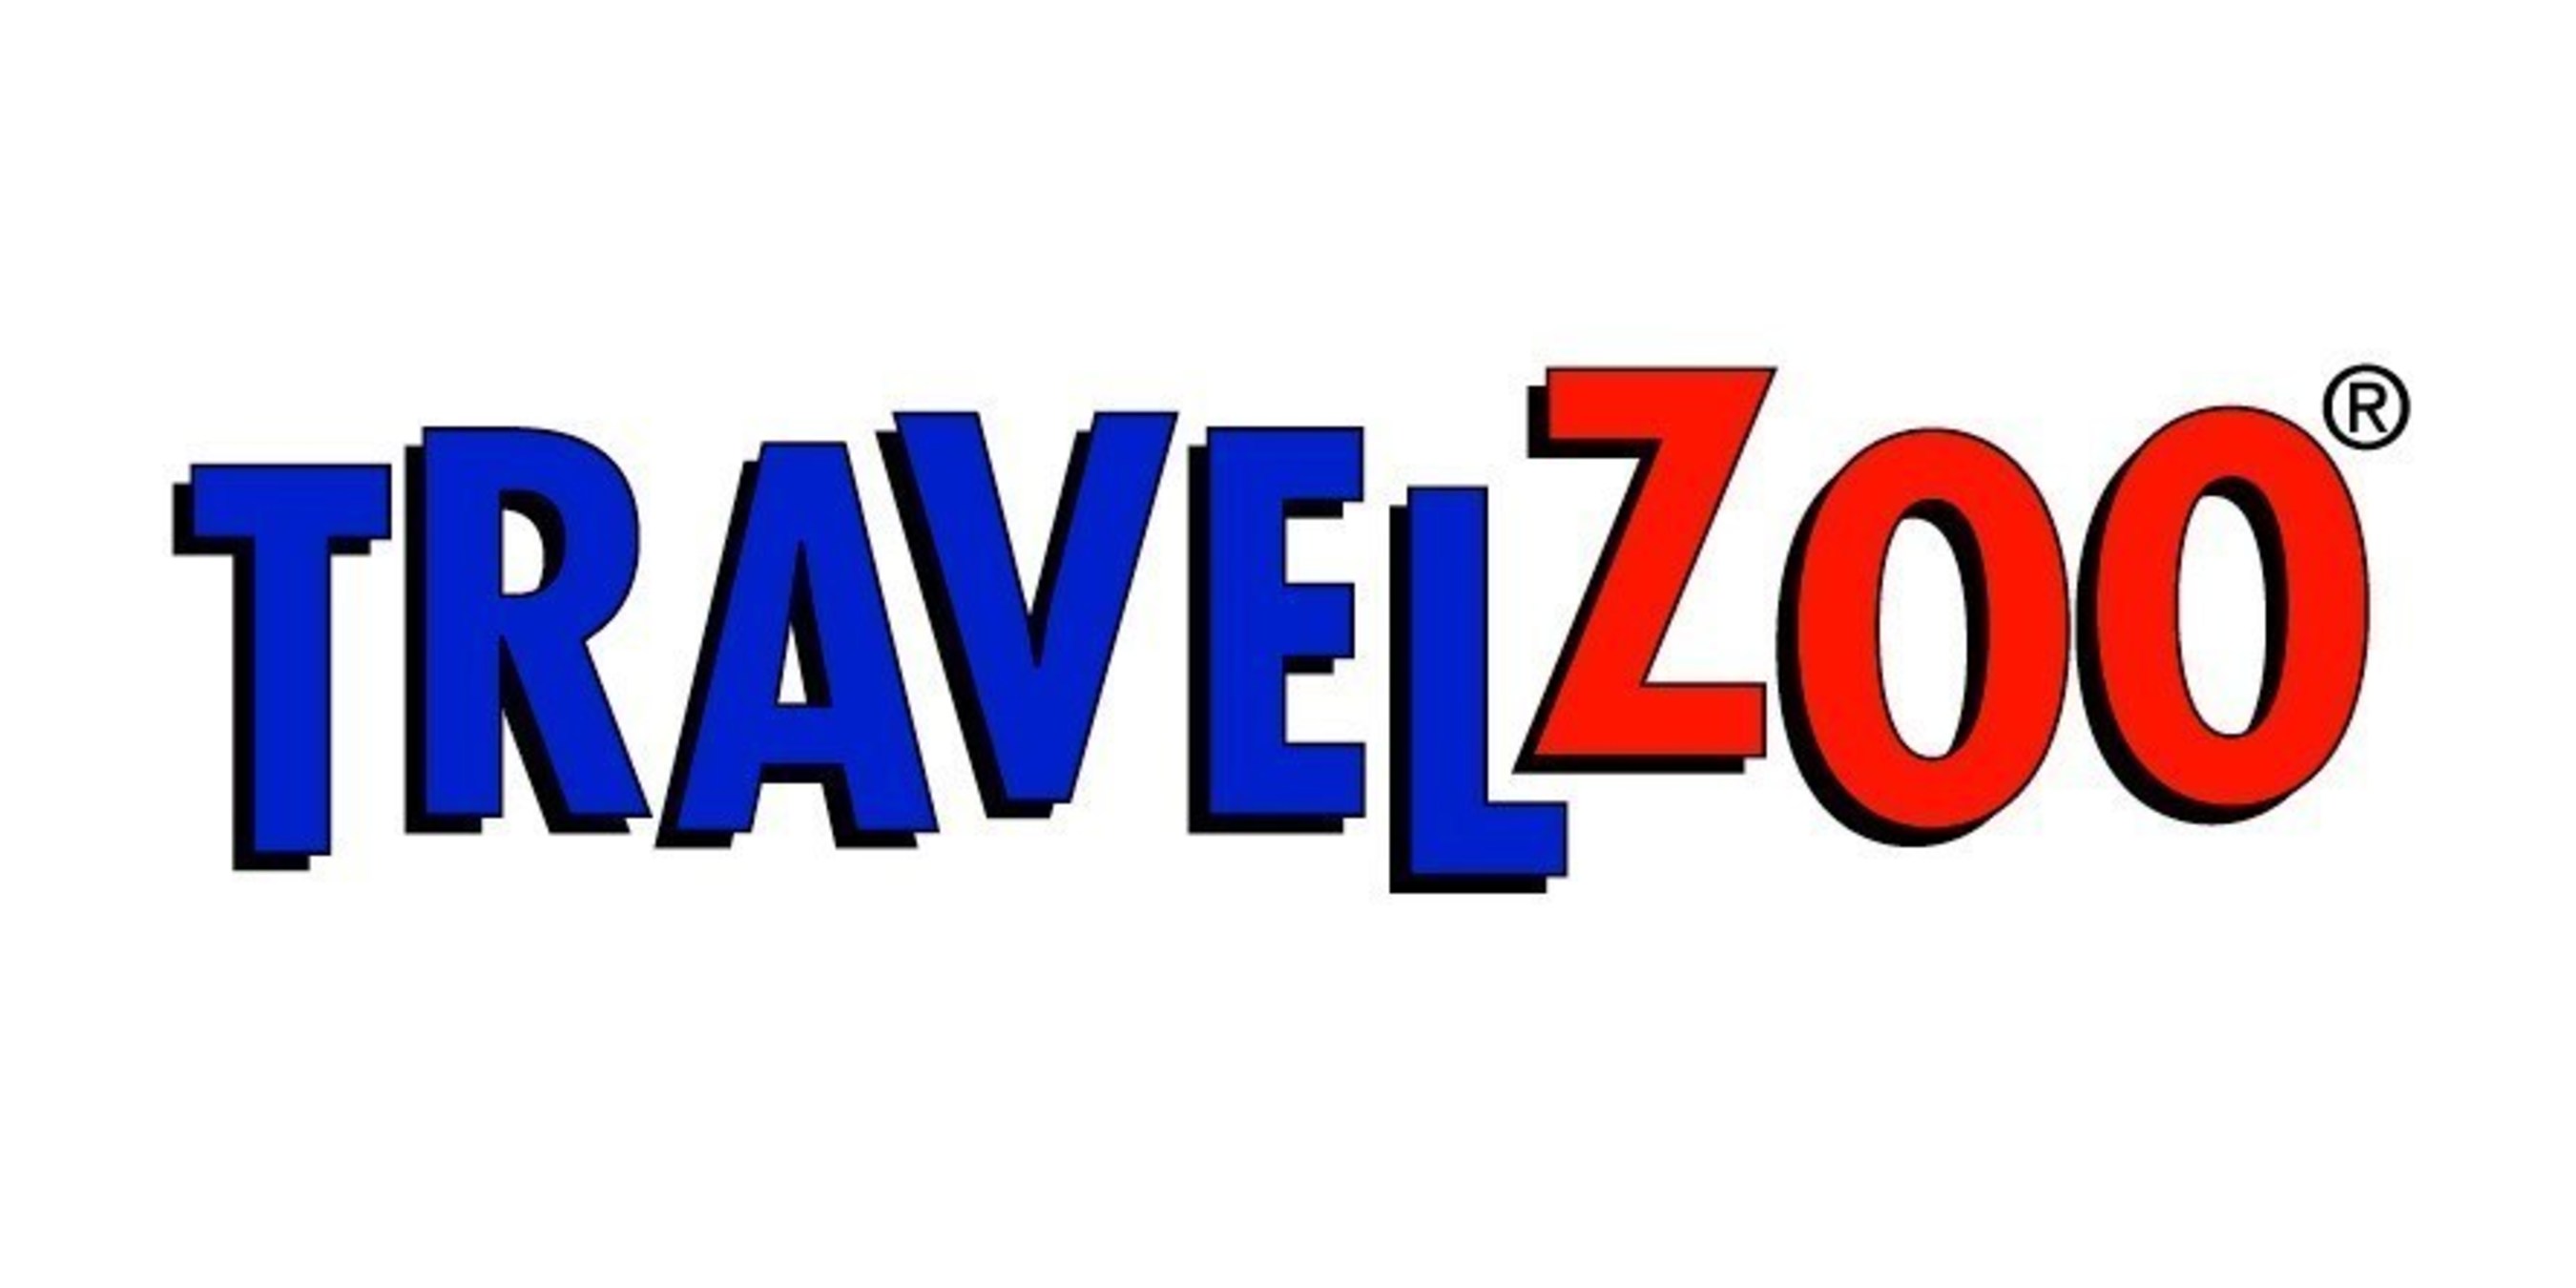 travel zoo inc